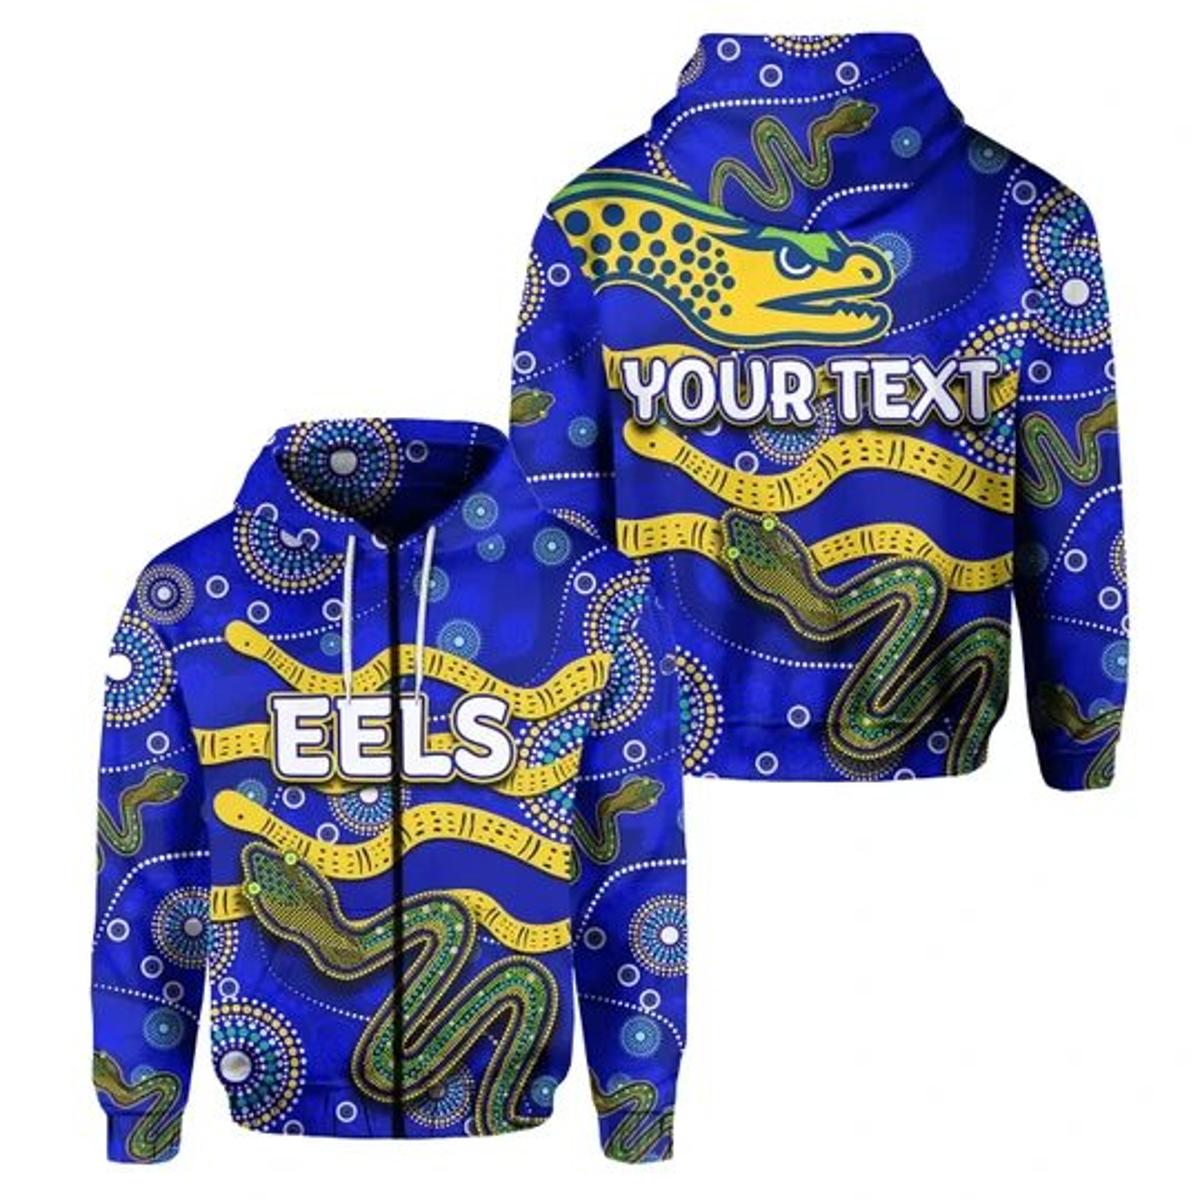 Parramatta Eels Custom Text Aboriginal Tribal Style Zip Hoodie For Fans